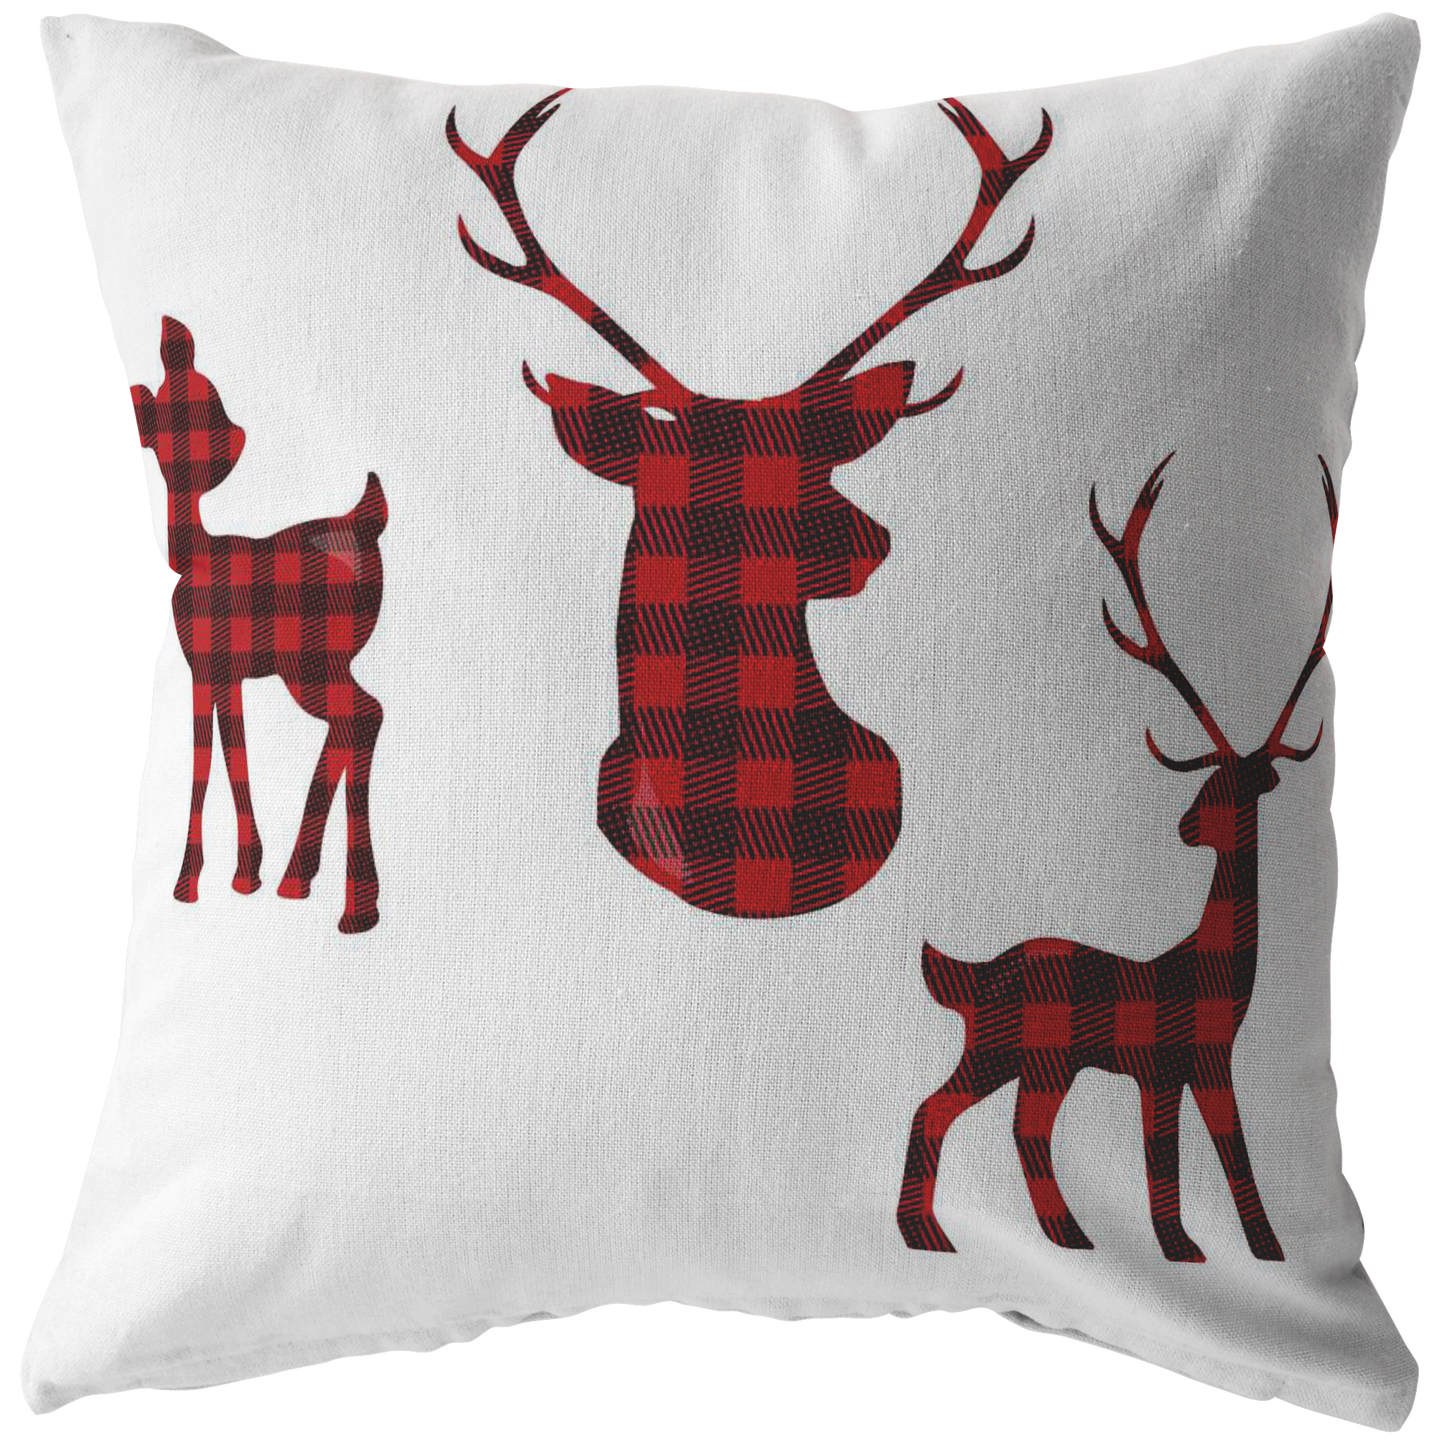 Buffalo Plaid Throw Pillow  Throw Pillow Cover  Dear Family Pillow Holiday Decorative Pillow Home Decor